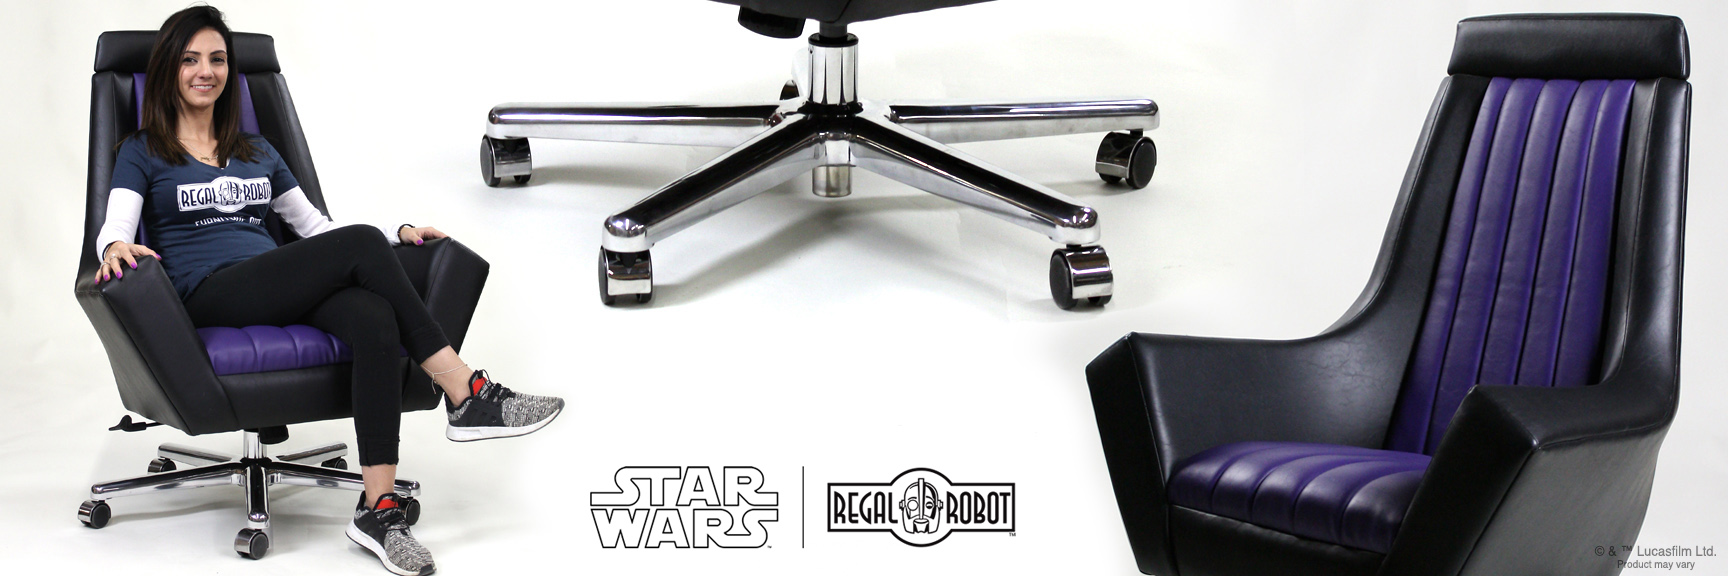 Custom Star Wars themed furniture by Regal Robot